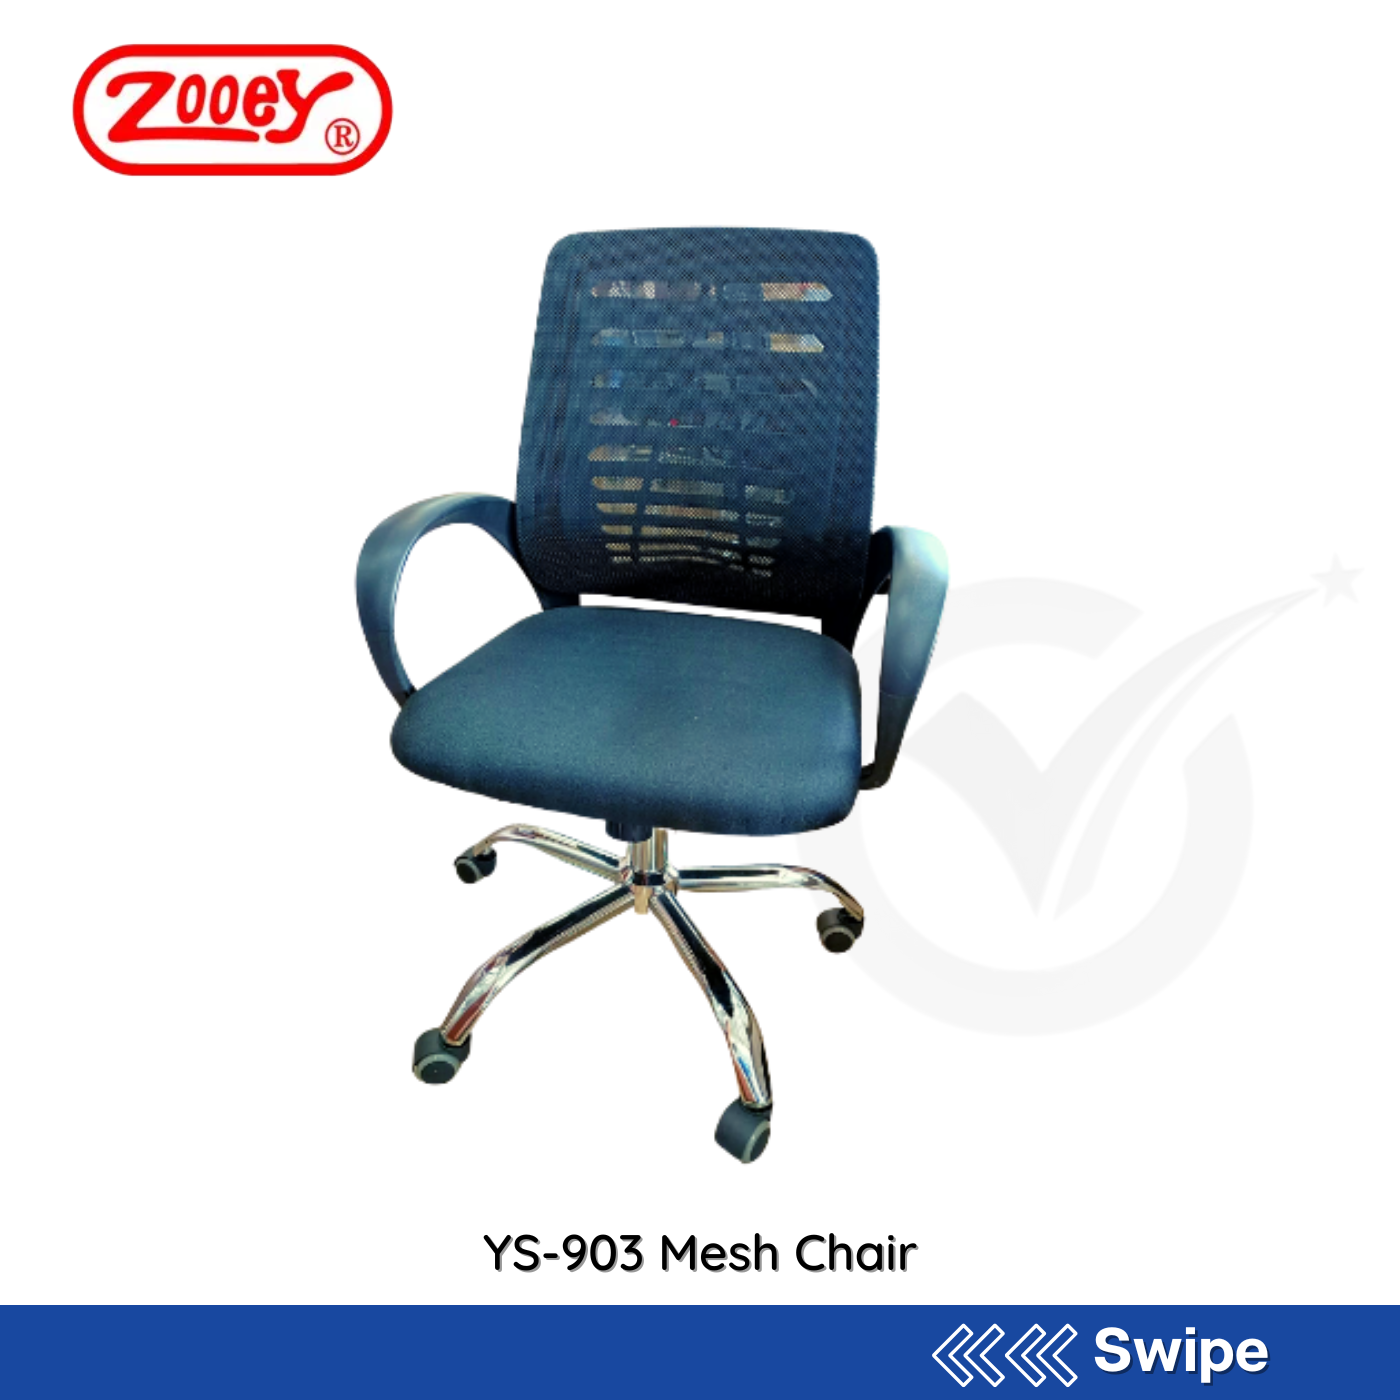 YS-903 Mesh Chair